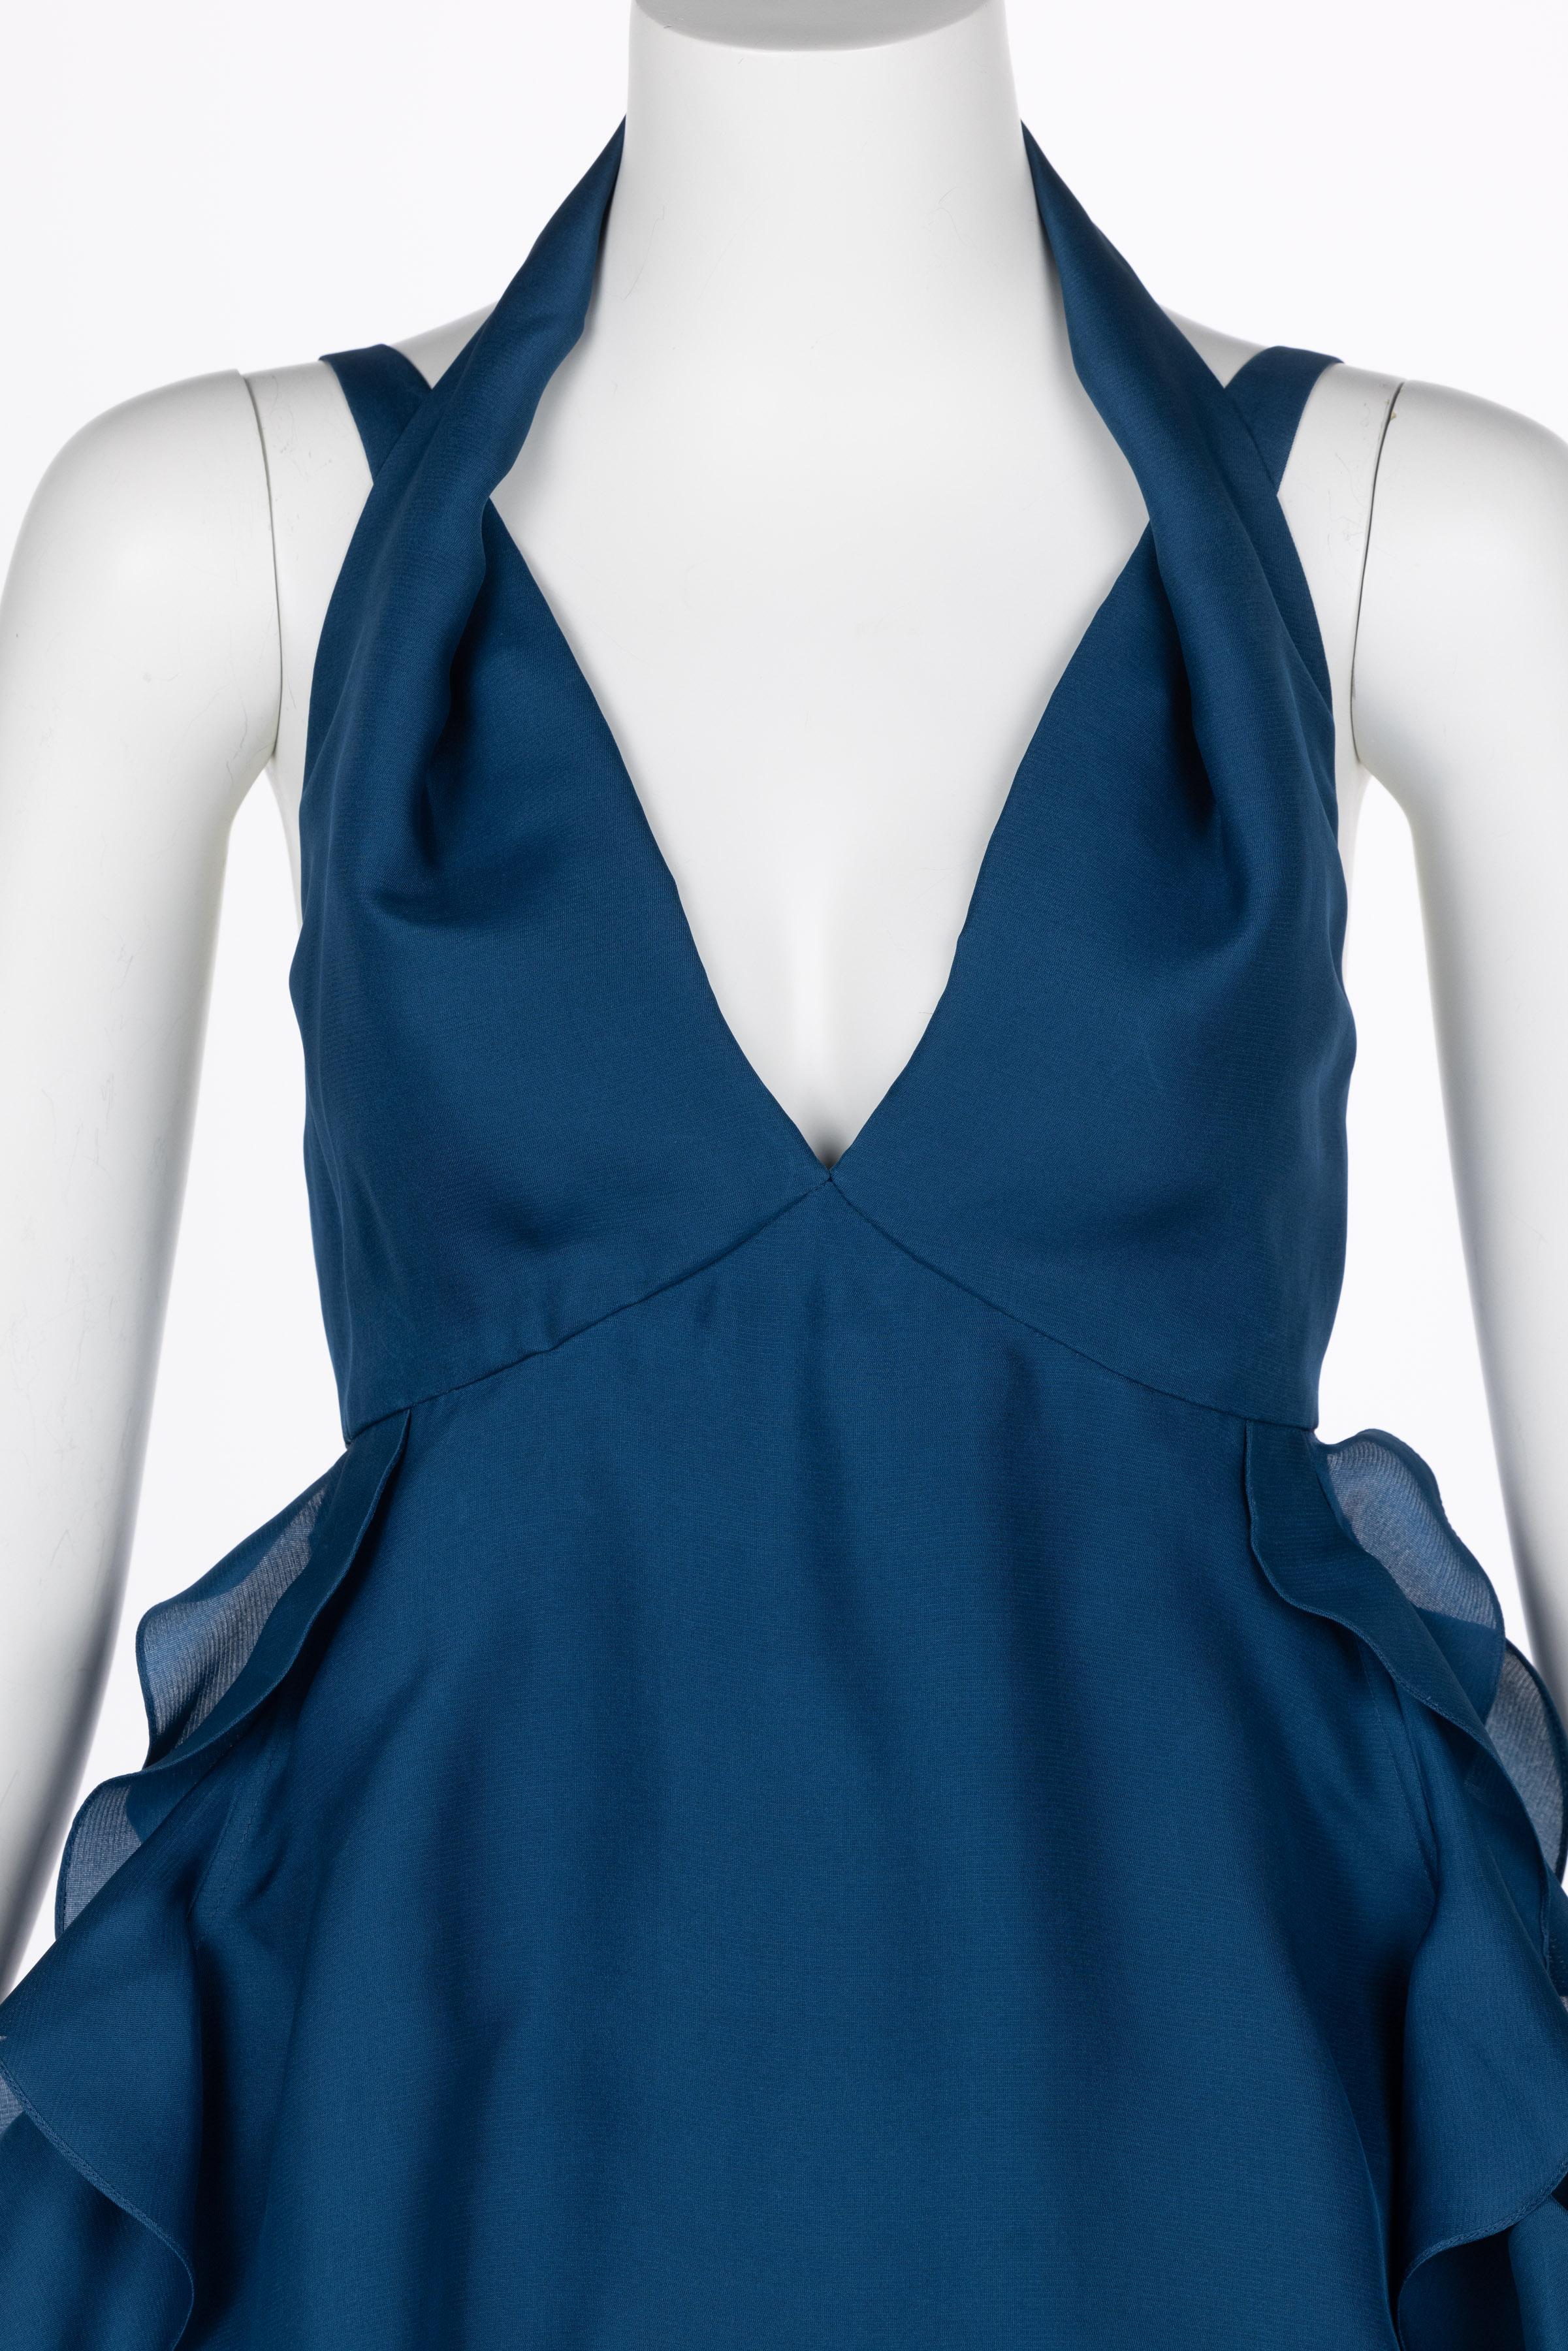 Yves Saint Laurent Blue Silk Organza Spring 2012 Runway Dress For Sale 3